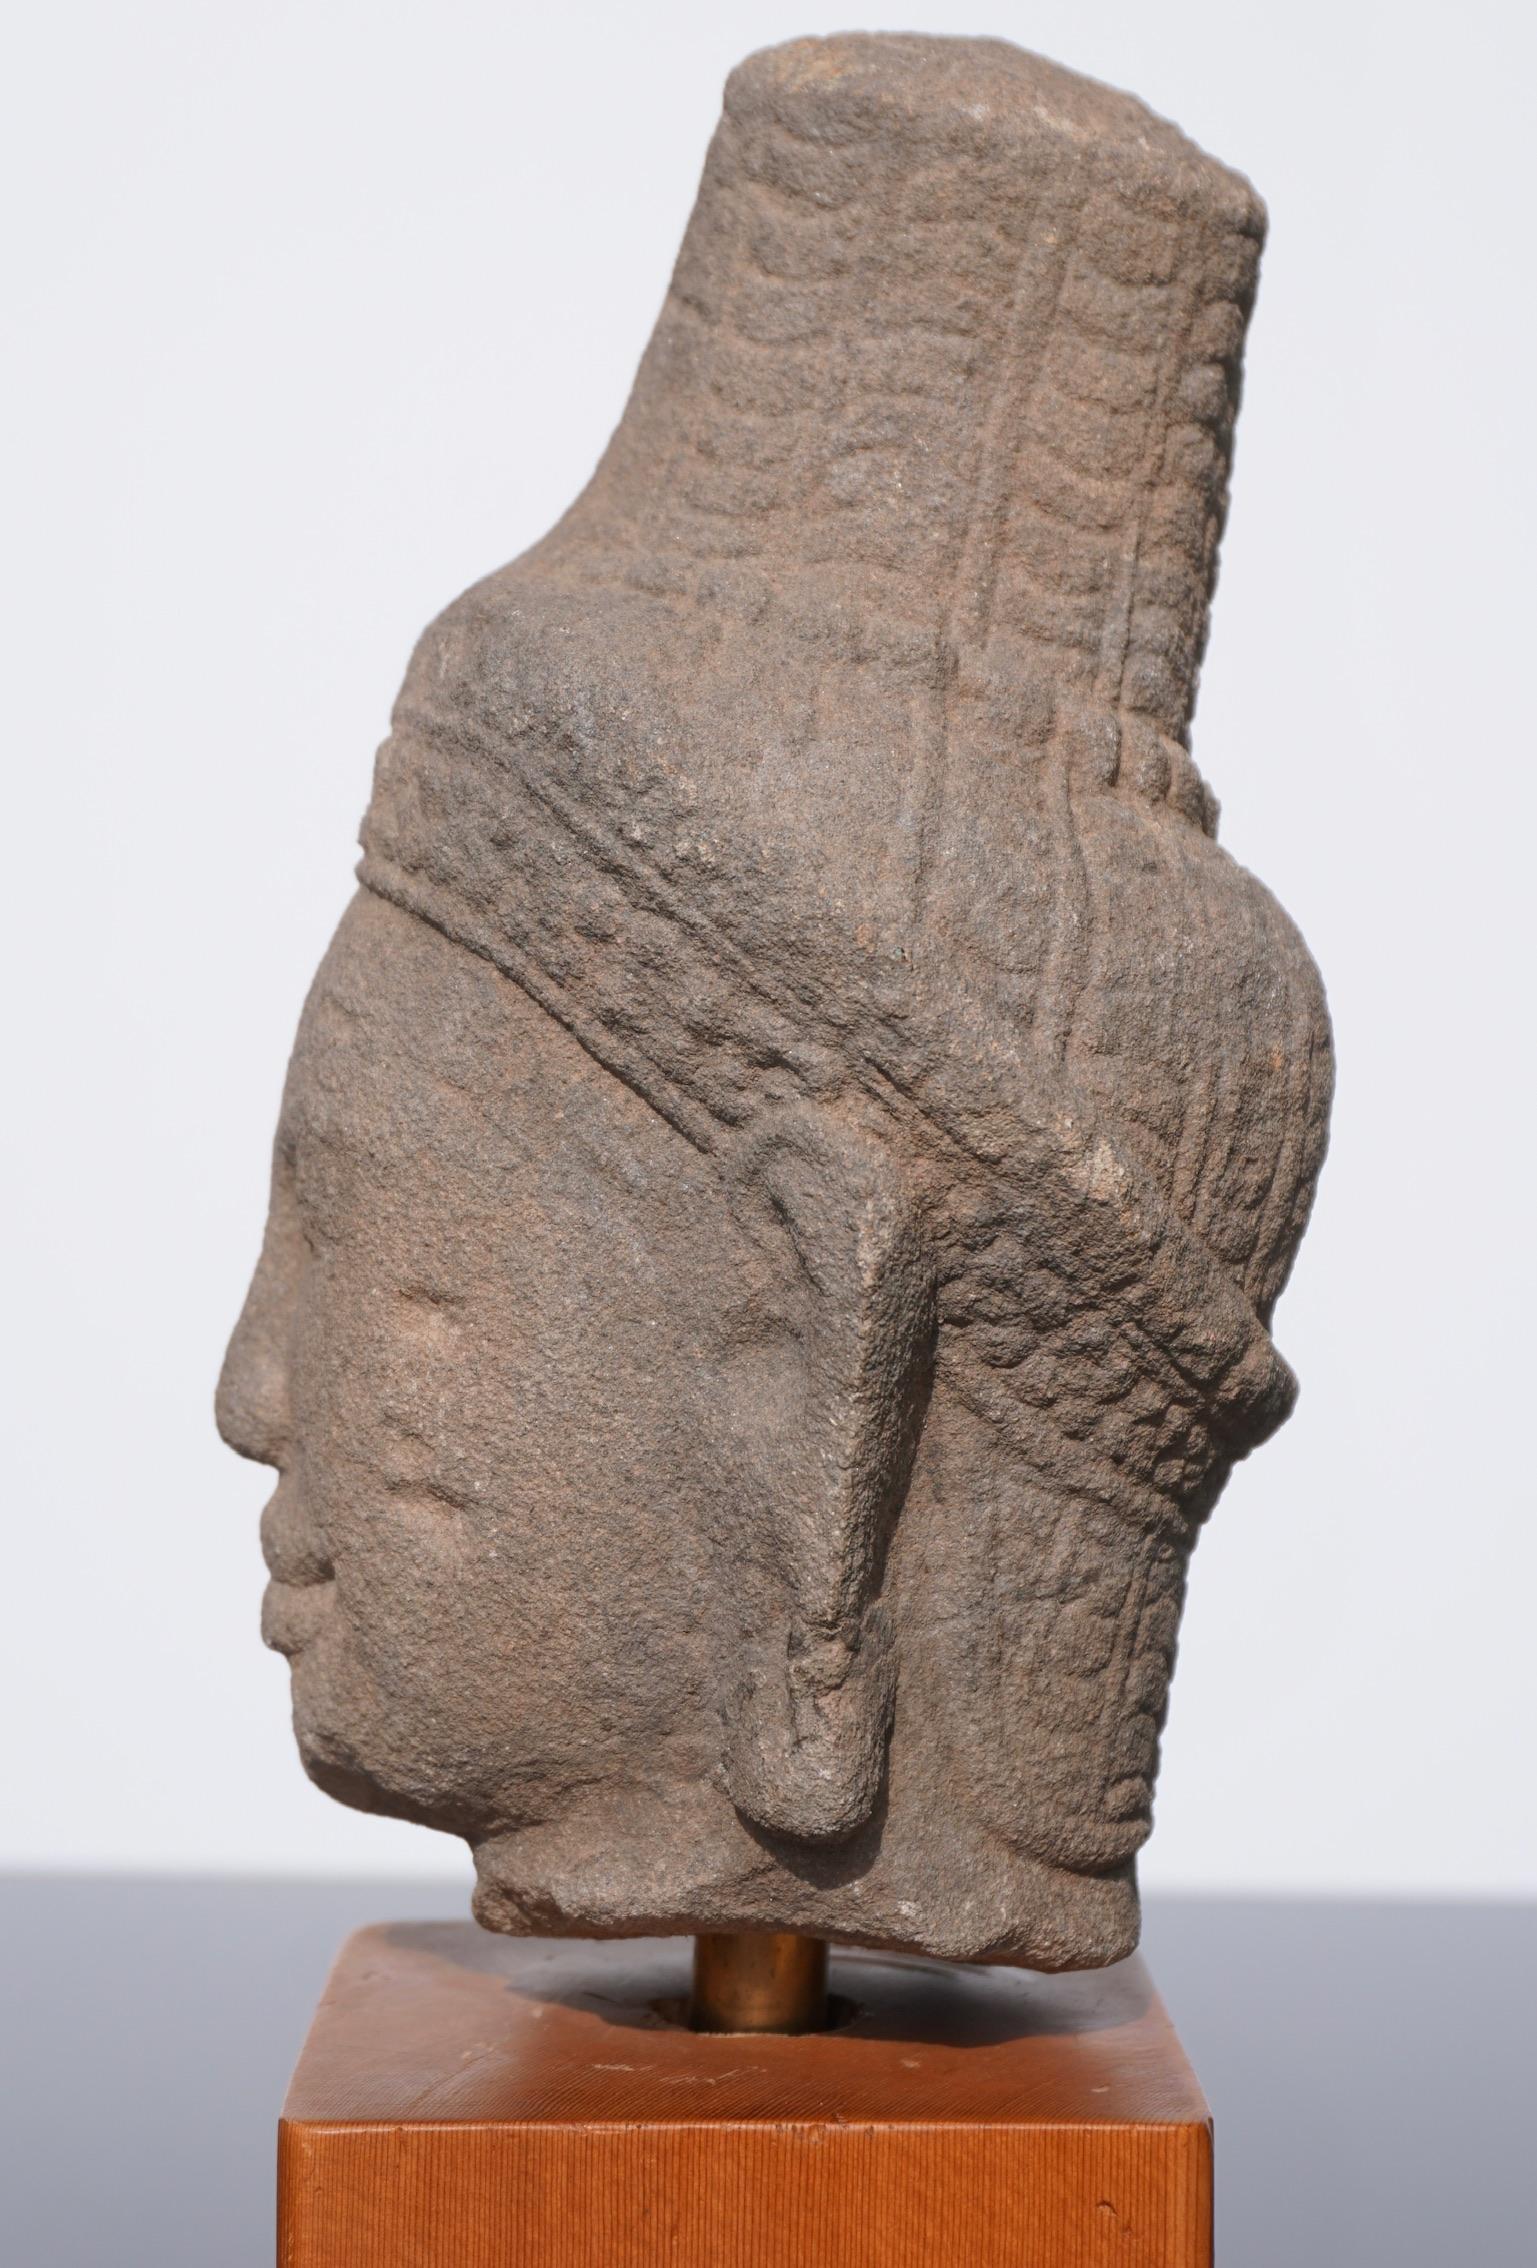 Khmer Sandstone Buddha Shiva Head 11th Century For Sale 3